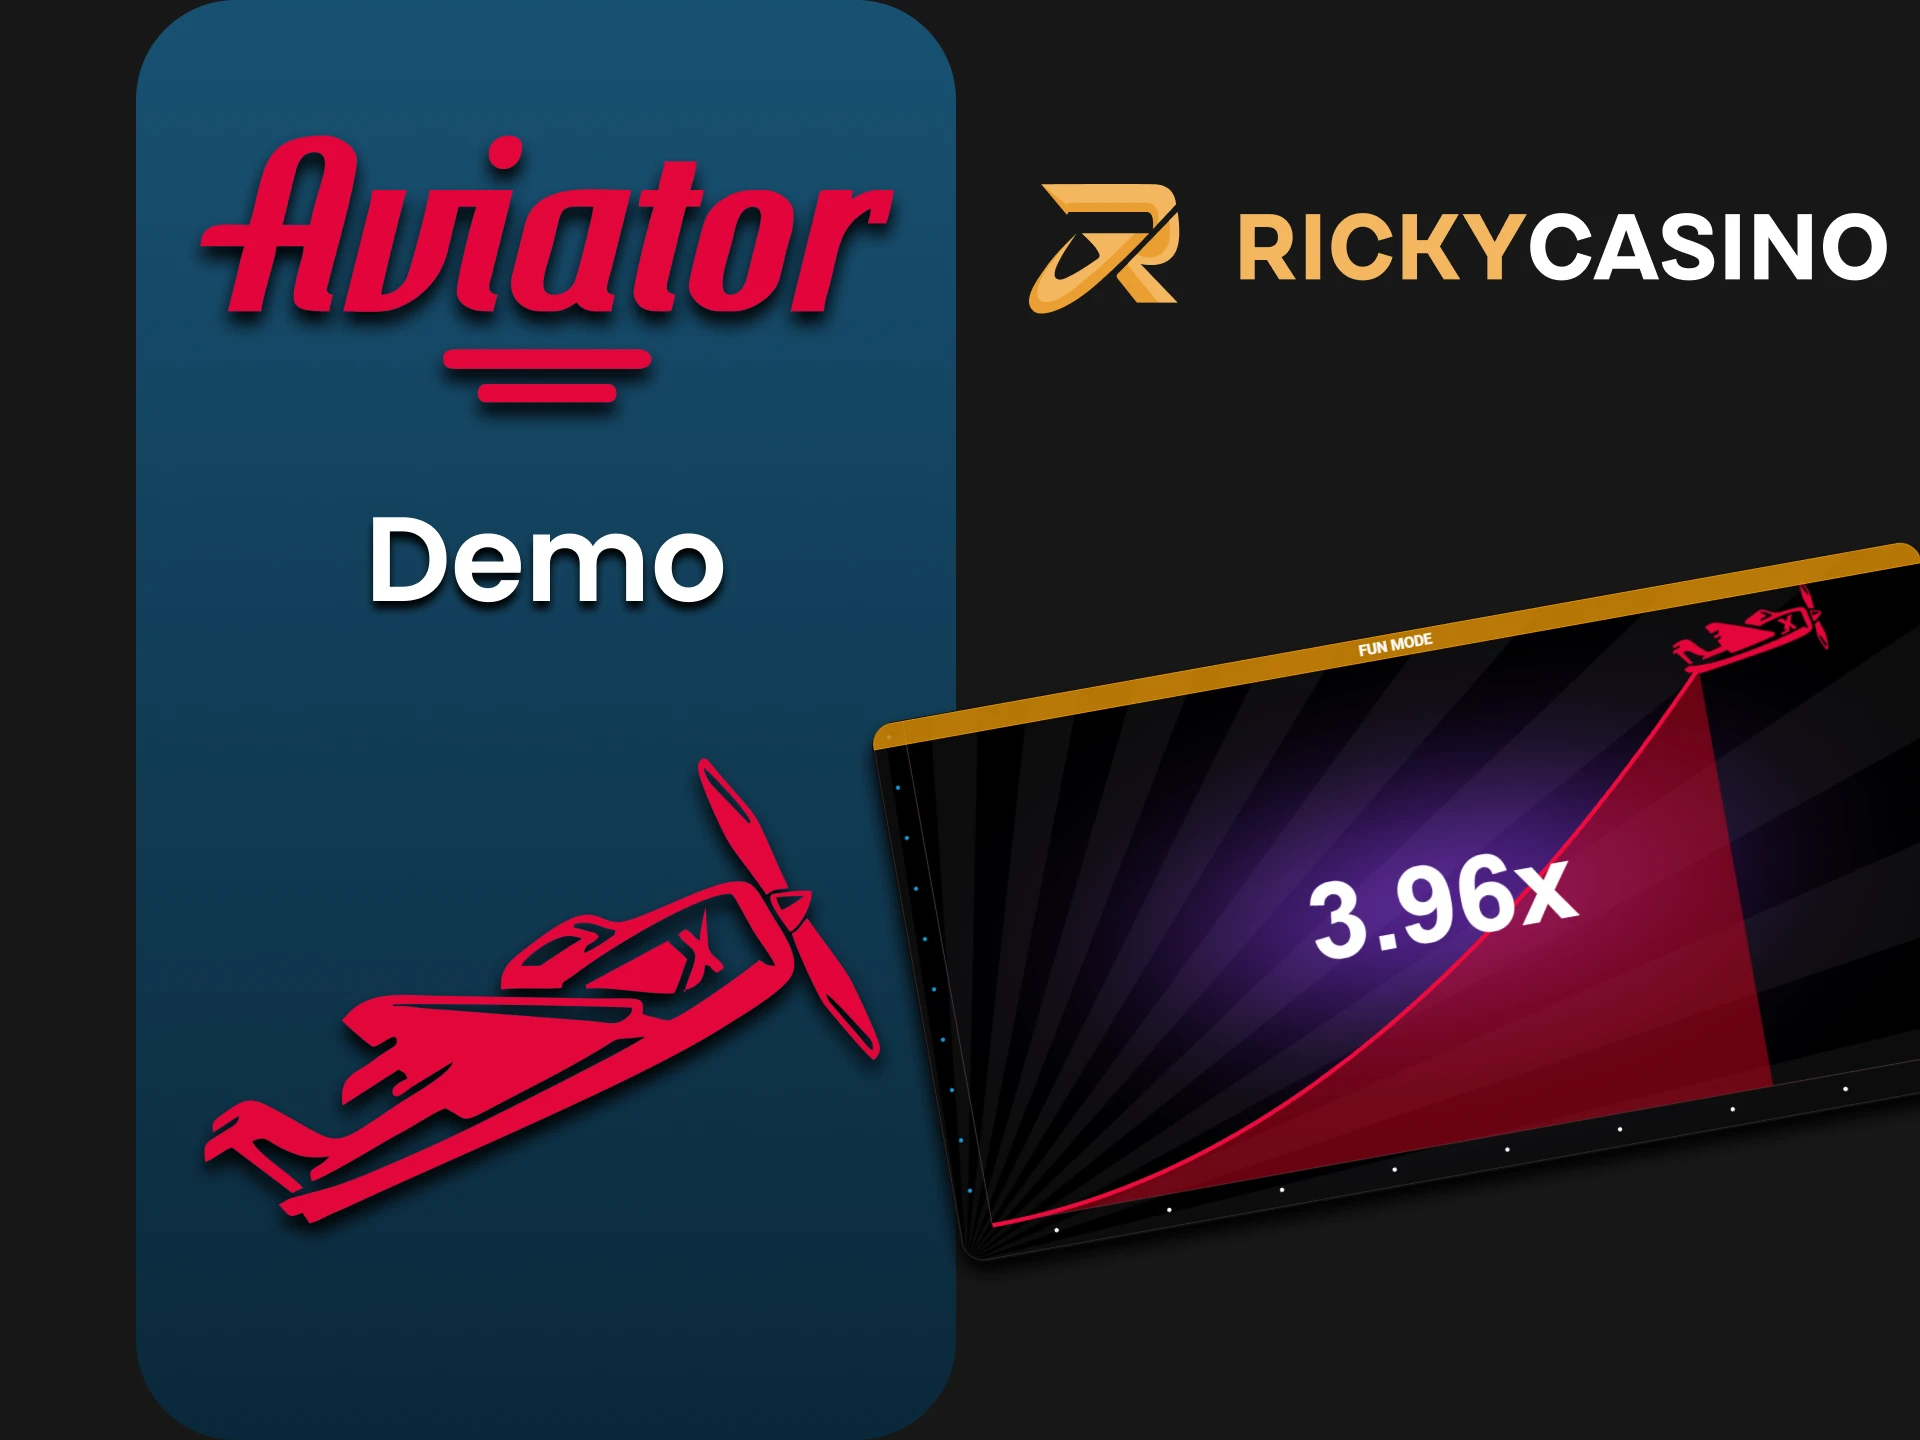 Ricky Casino has a demo version of Aviator.